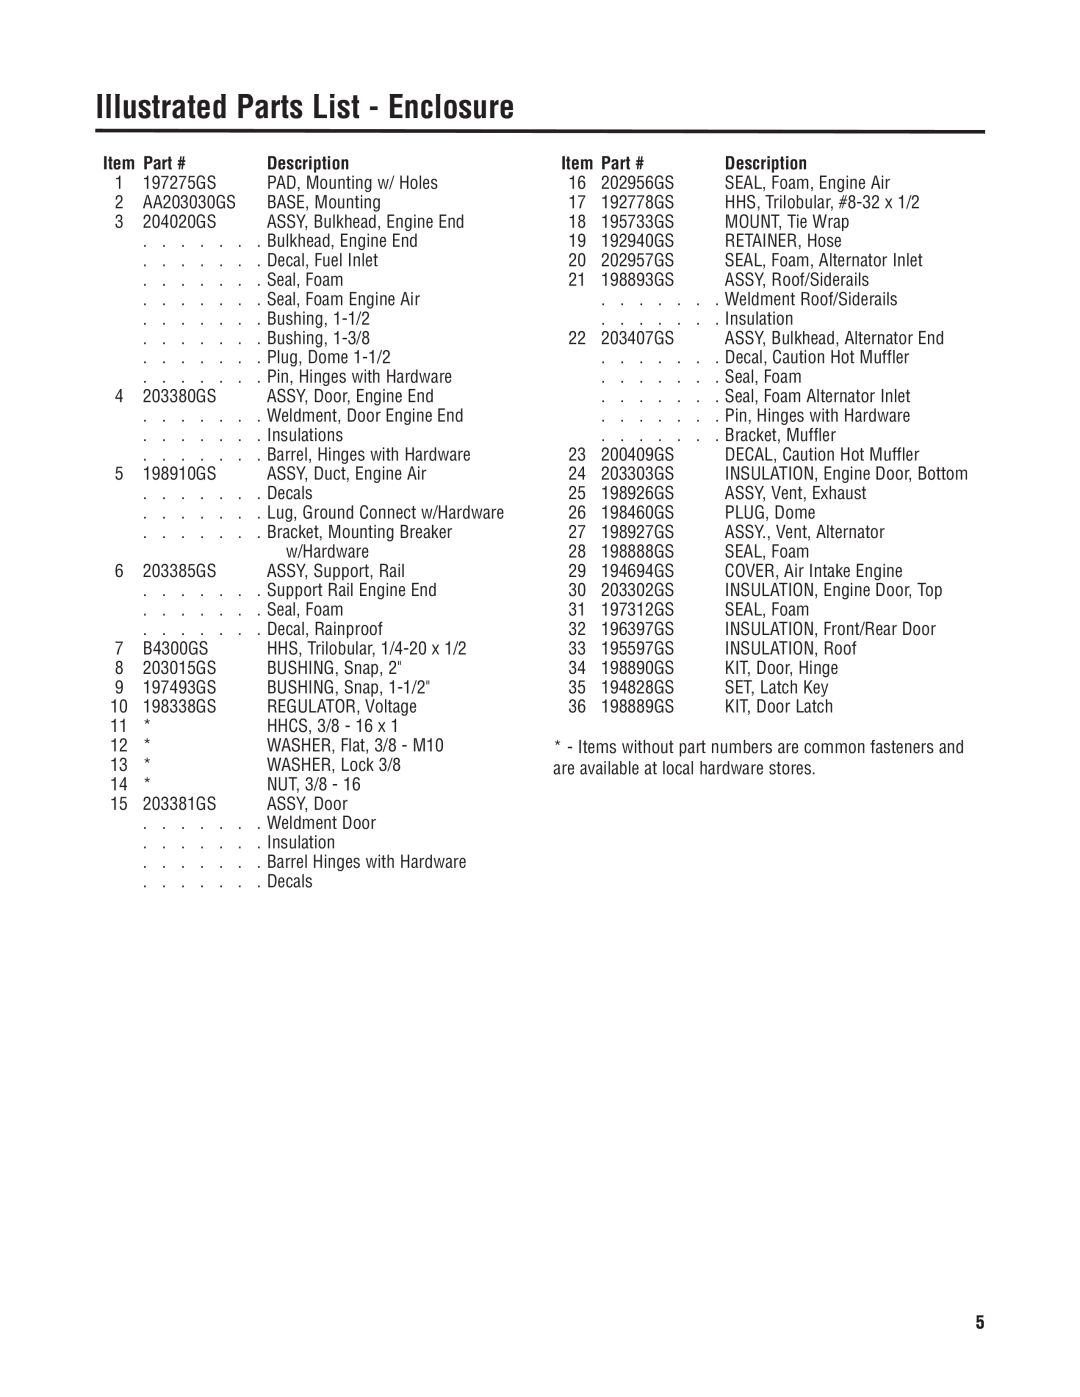 Briggs & Stratton 40277 manual Illustrated Parts List - Enclosure, Part #, Description 